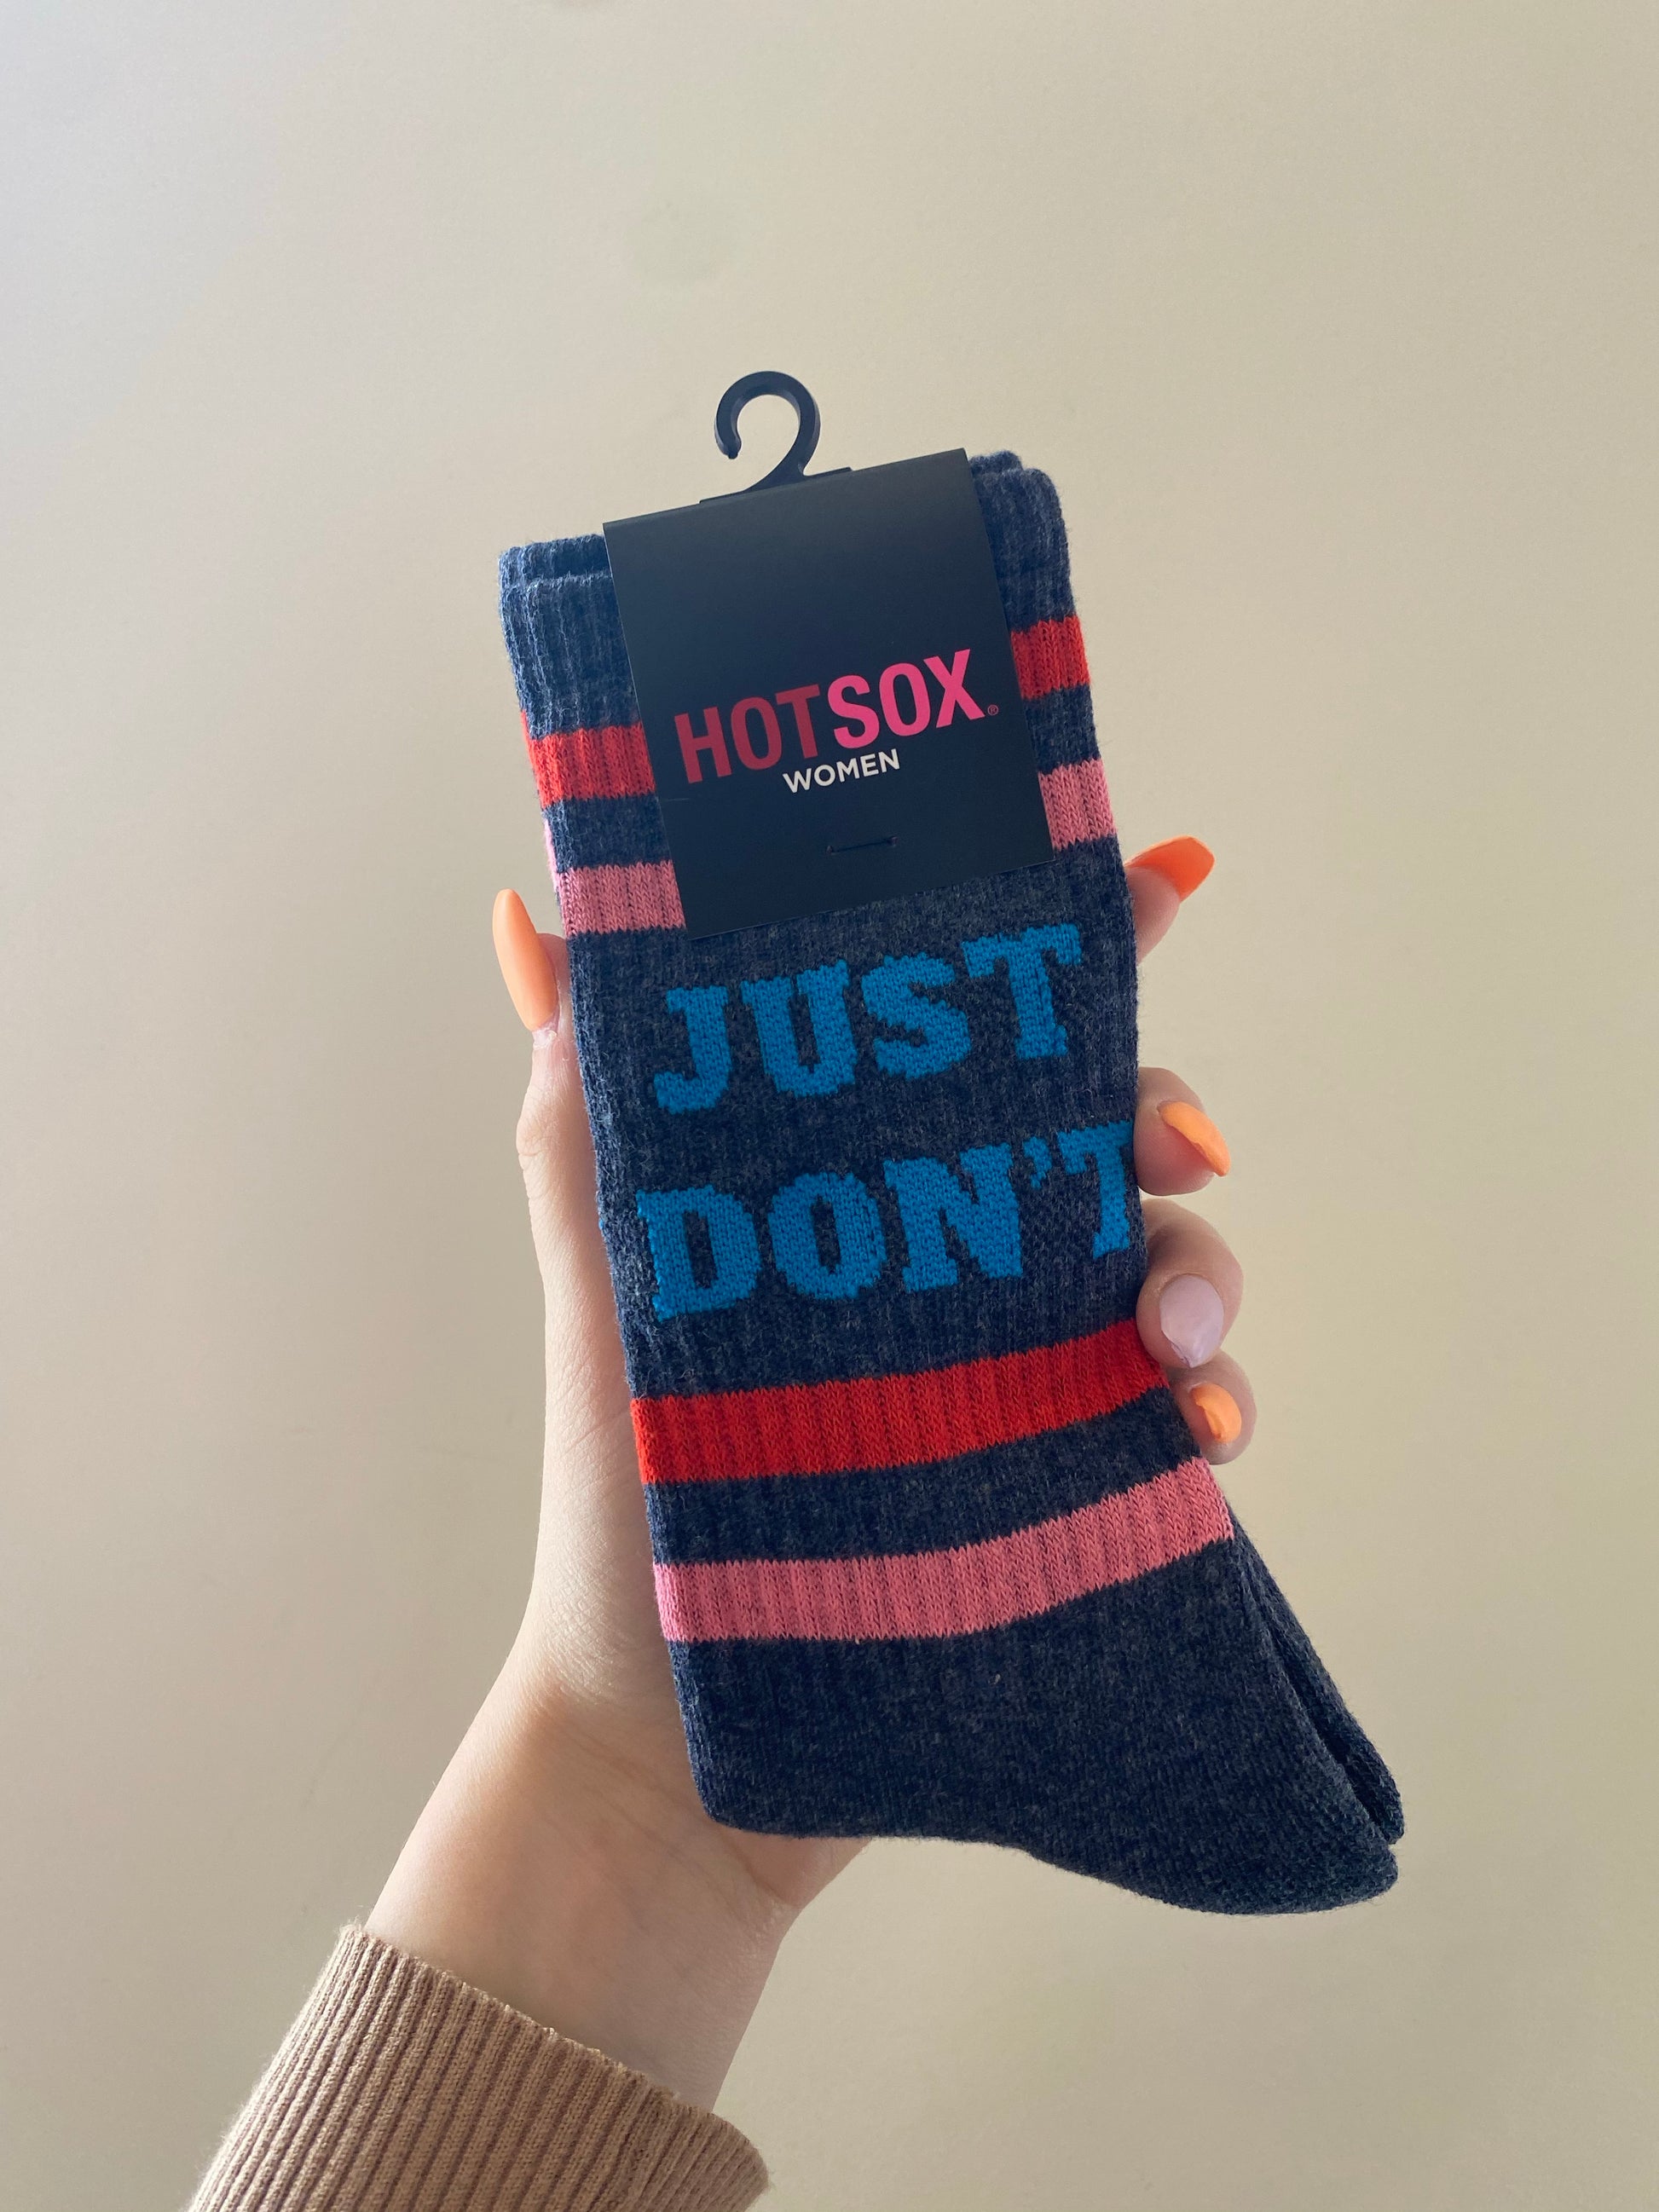 HOTSOX Women's "Just Don't" Crew Socks